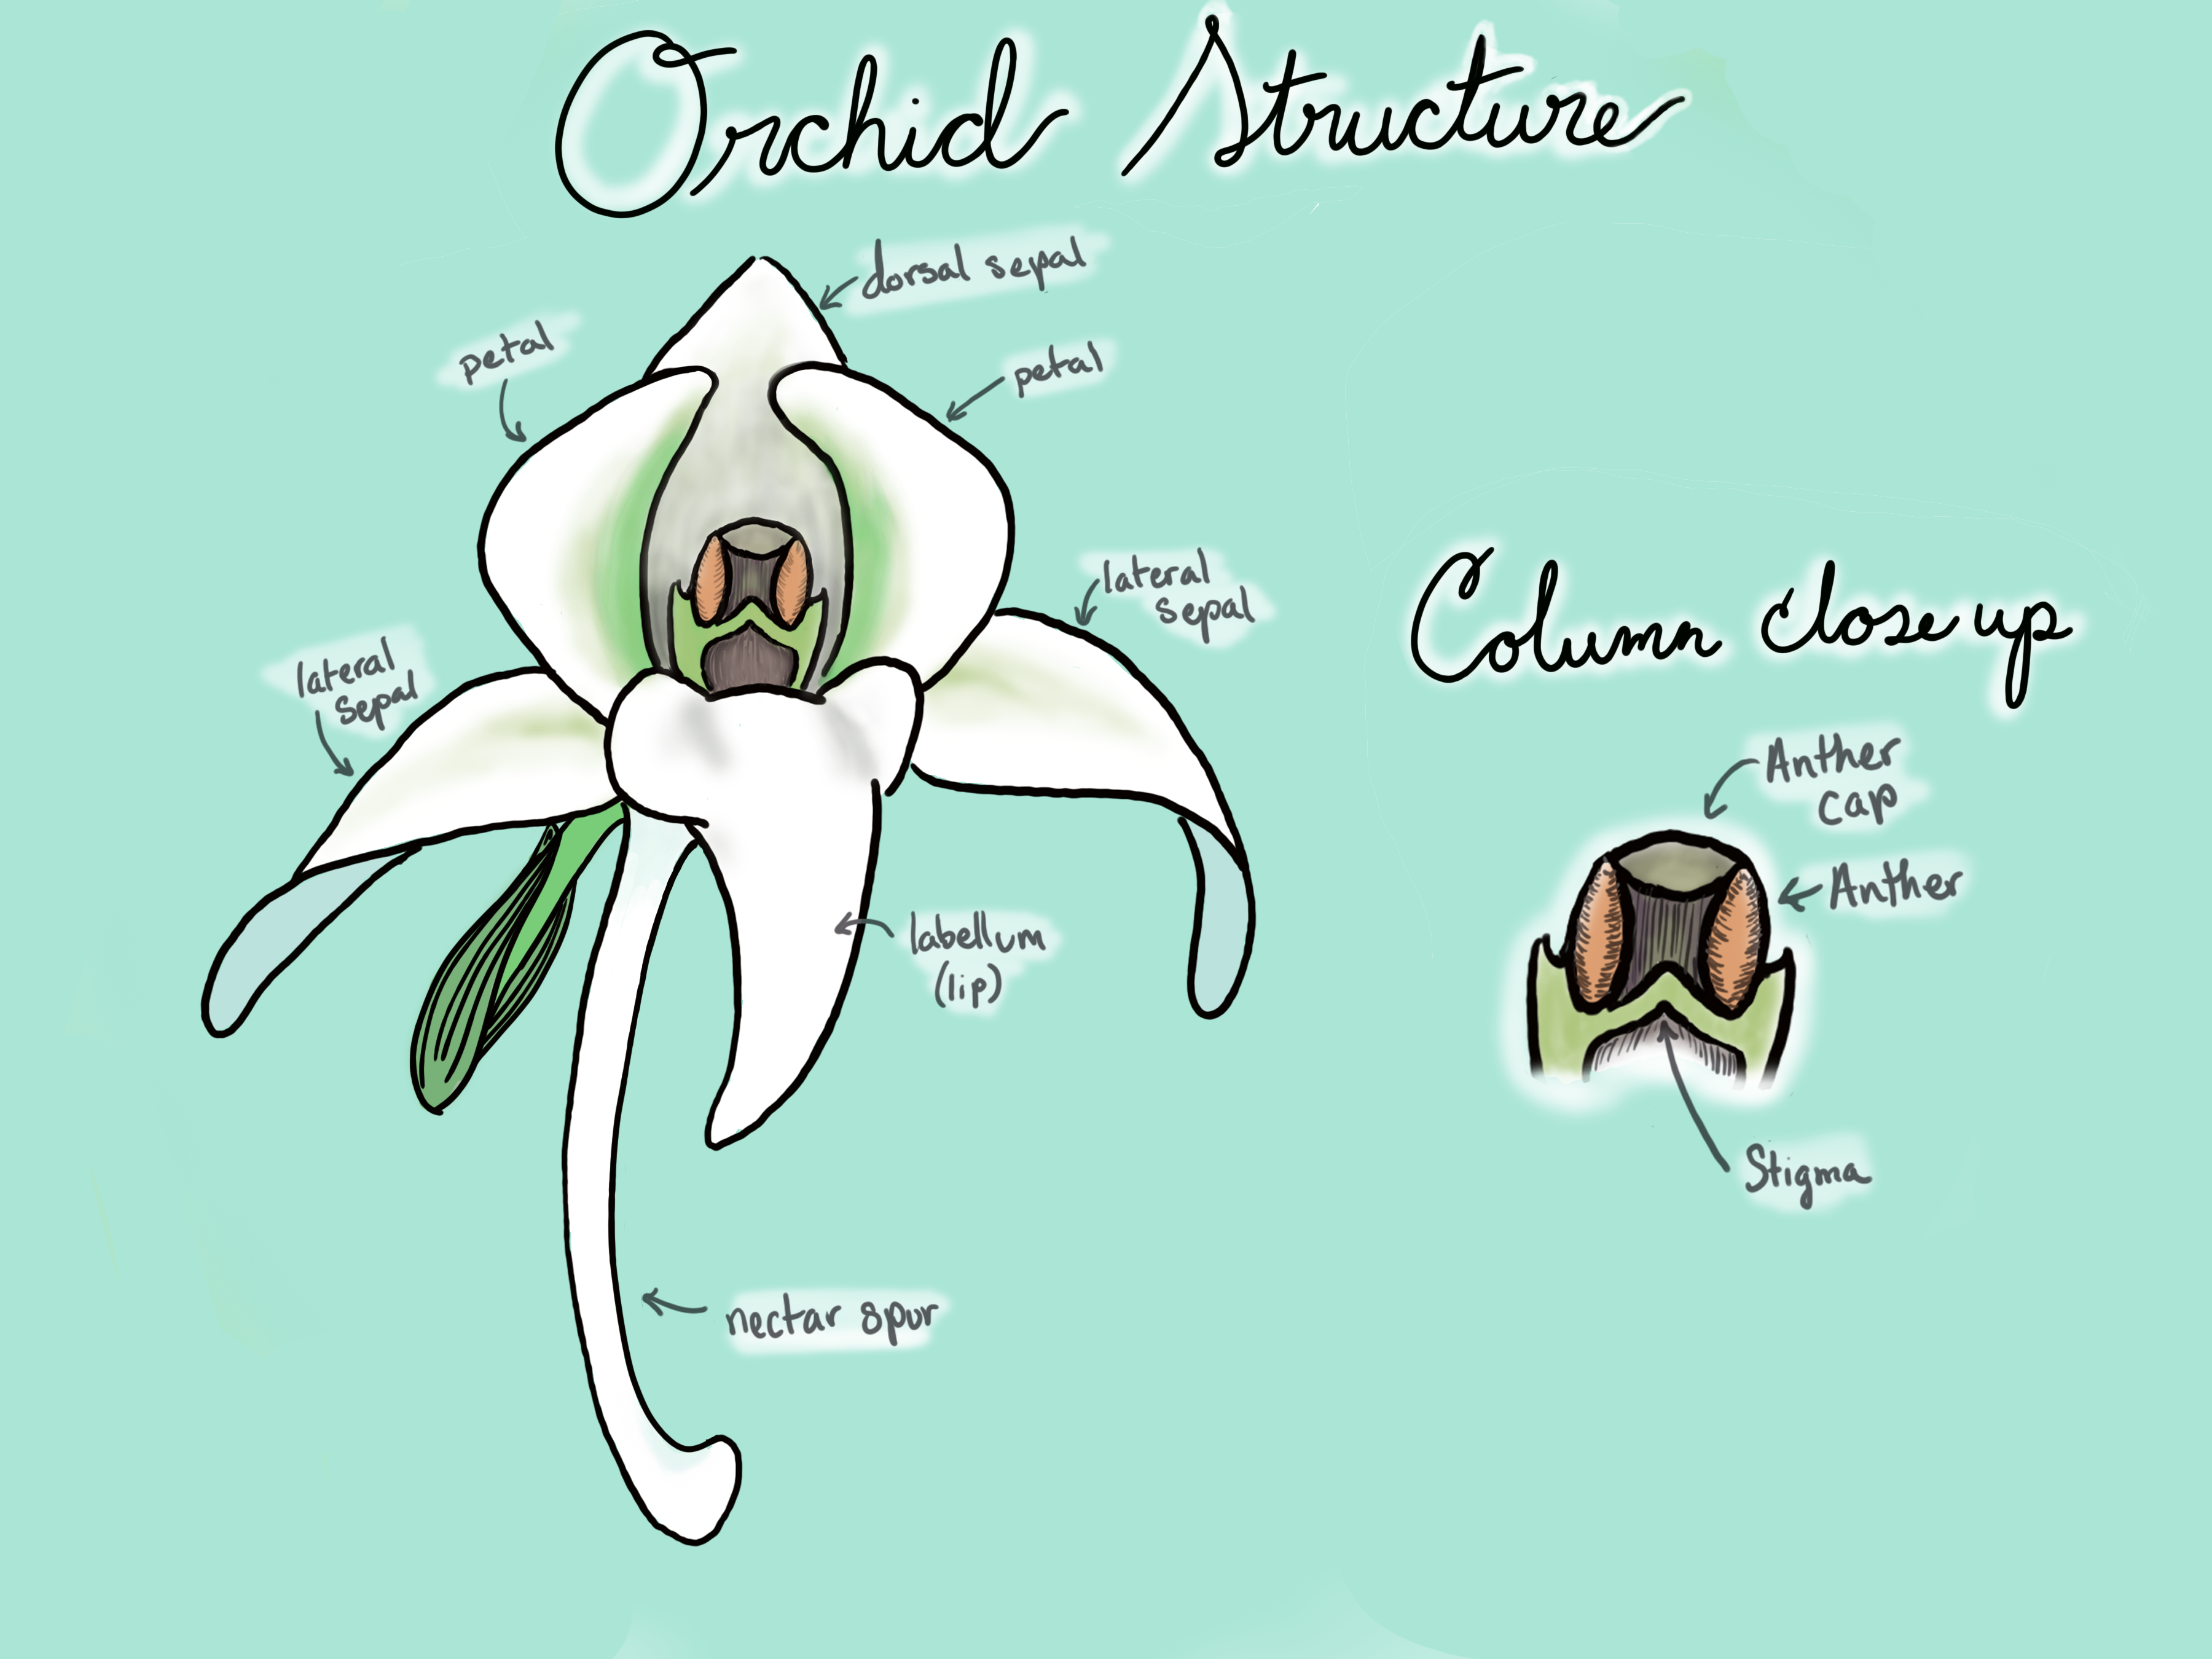 Orchid structure diagram